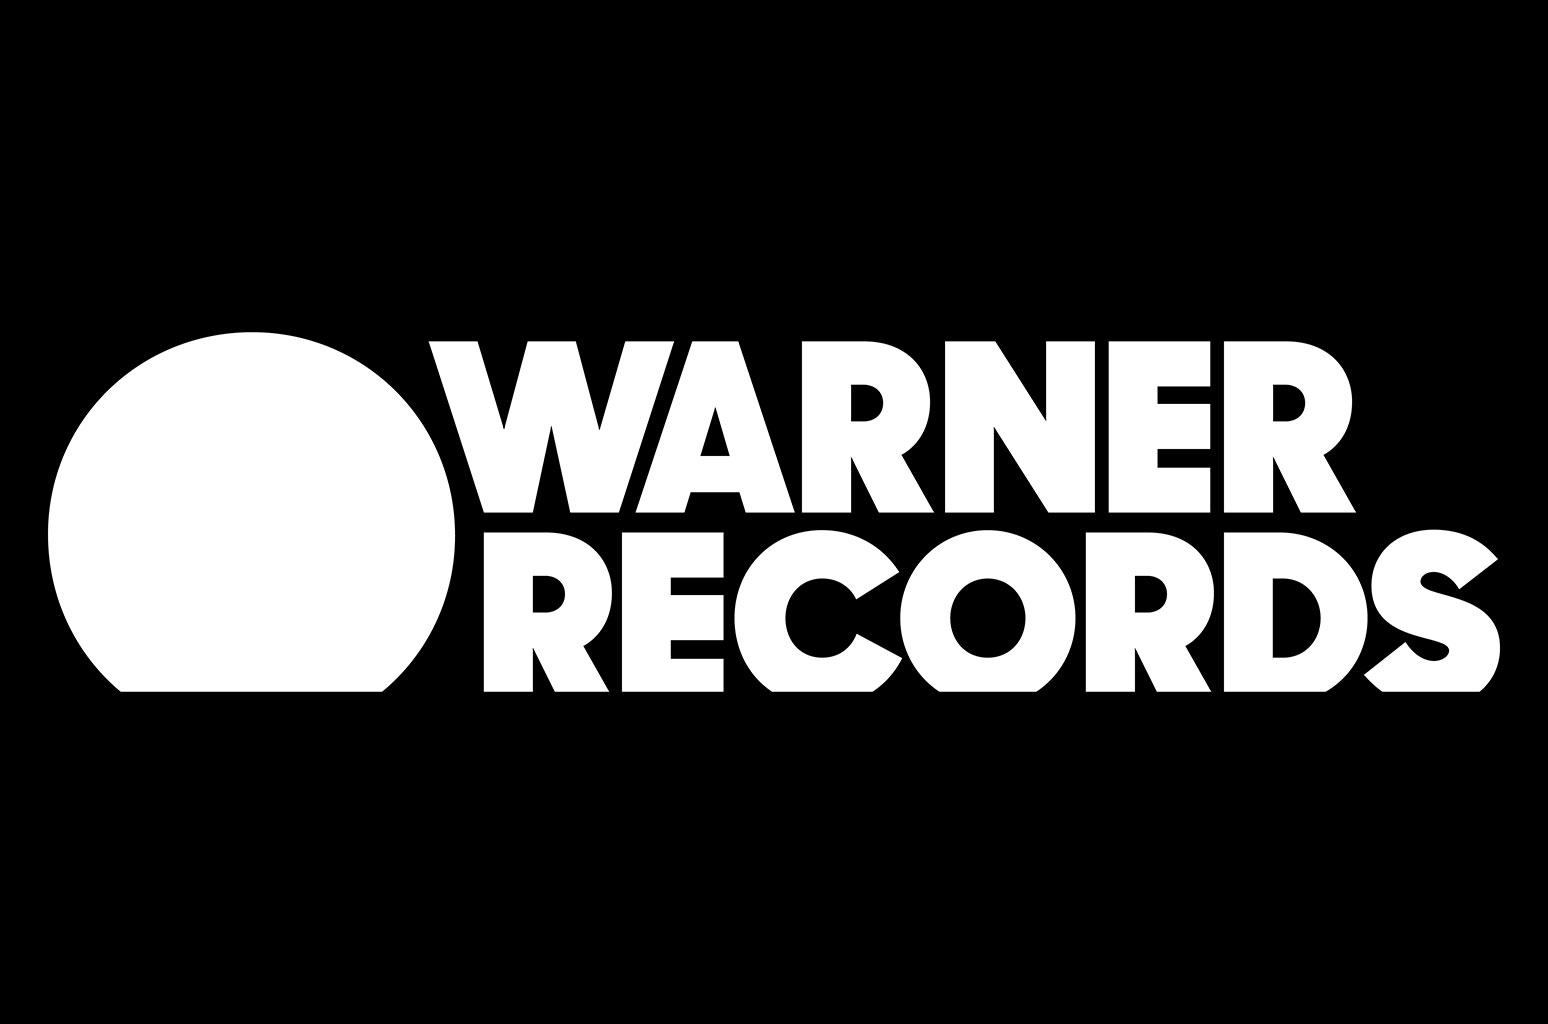 After 61 Years, Warner Bros. Records Rebrands As Warner Records